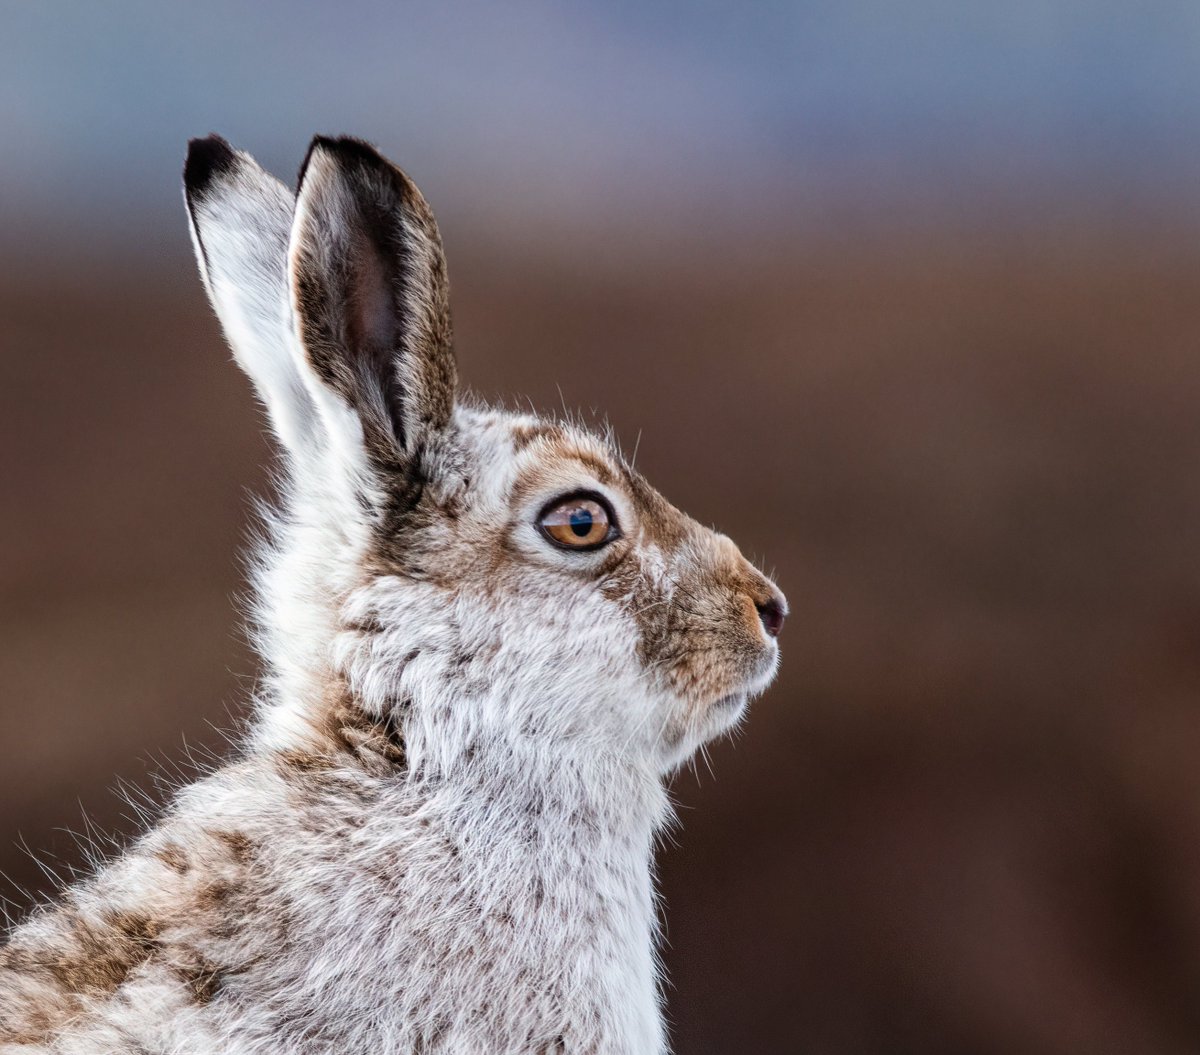 Mountain hare. Photographed in the Peak District, UK 
#WildlifePhotographer #Wildlife #Nature #Animals #MountainHare #UKWildlife #BBCSpringWatch #NatureLovers #NaturePhotography #PeakDistrict #PeakDistrictNationalPark #VisitDerbyshire #Derbyshire